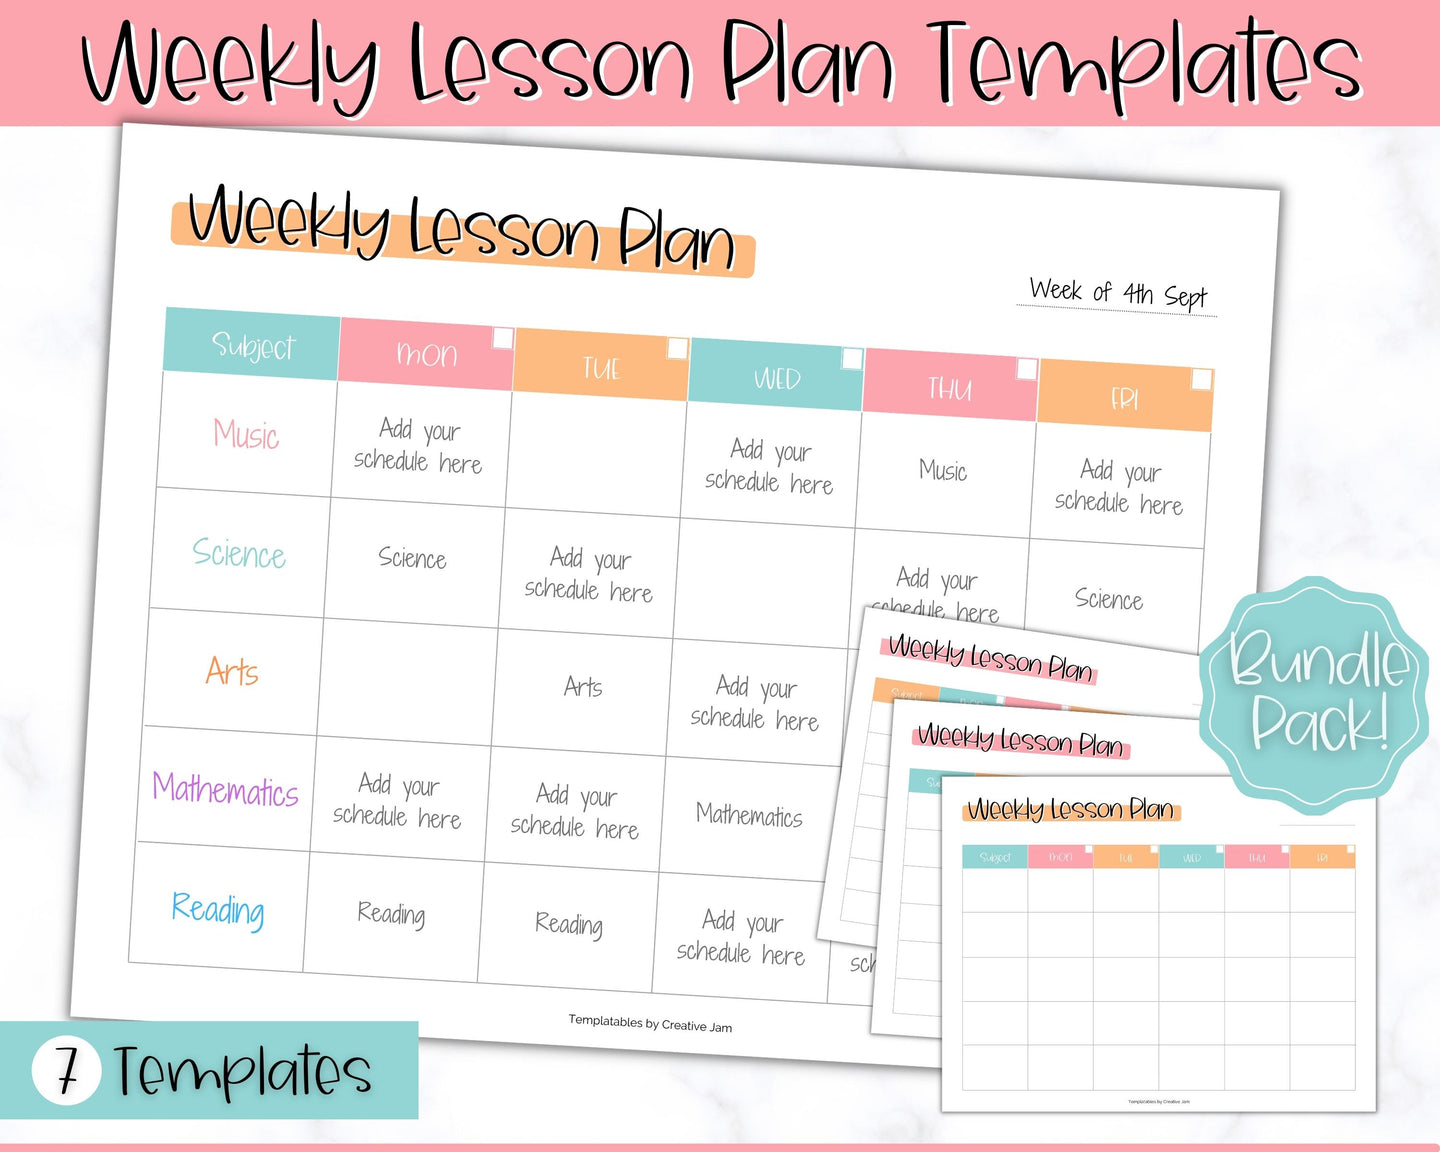 Weekly Lesson Plan Template Printable | Teacher Lesson Plan, Editable Digital Lesson Planner | Colorful Sky